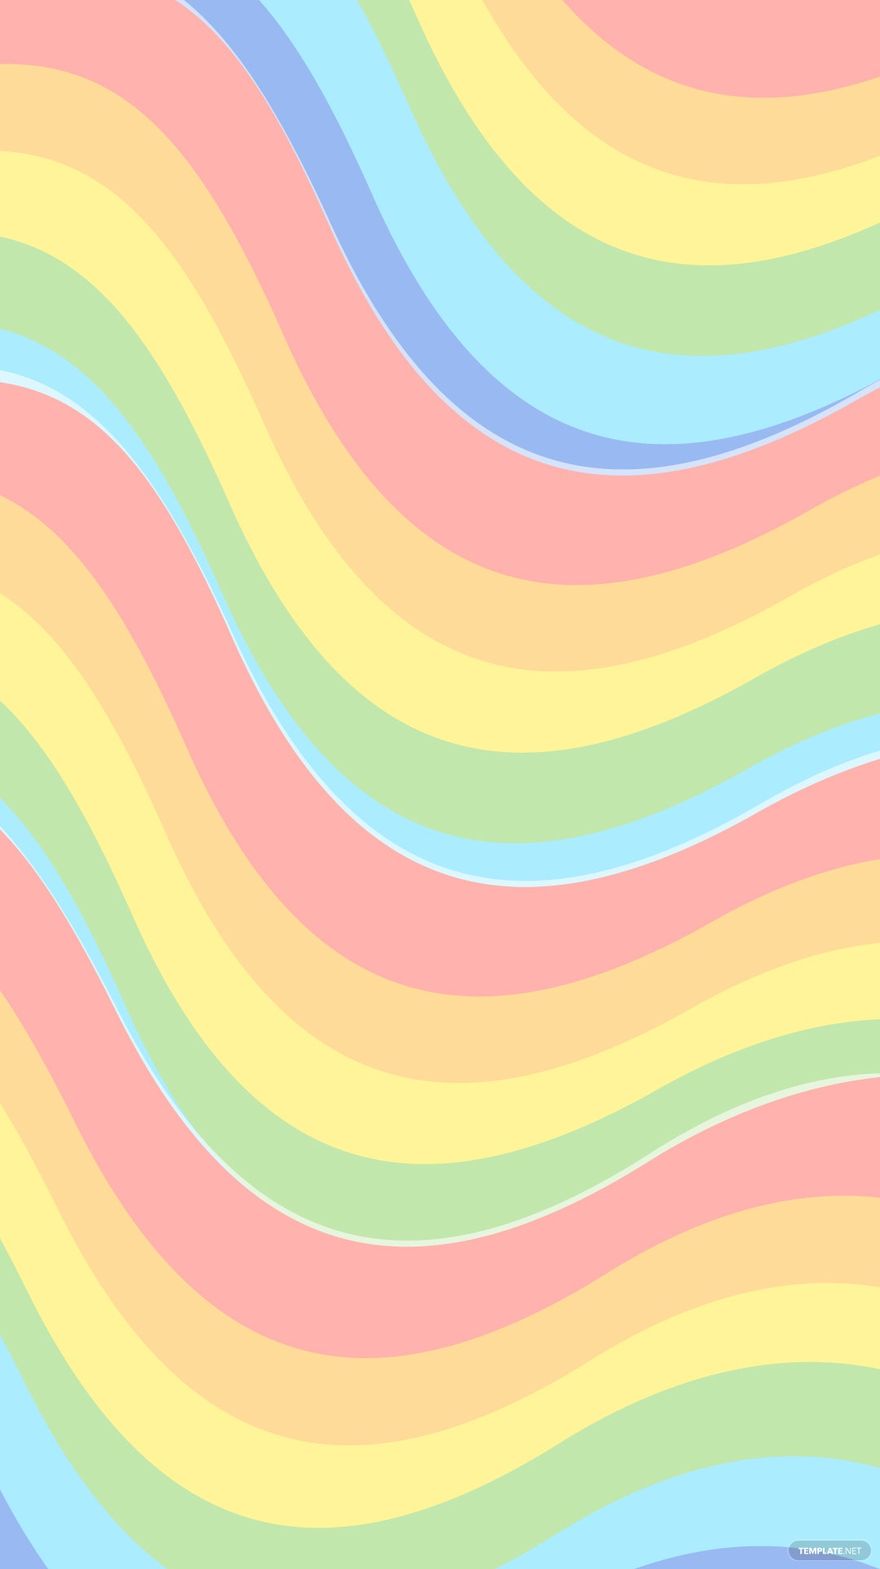 Free Rainbow Background iPhone in Illustrator, EPS, SVG, JPG